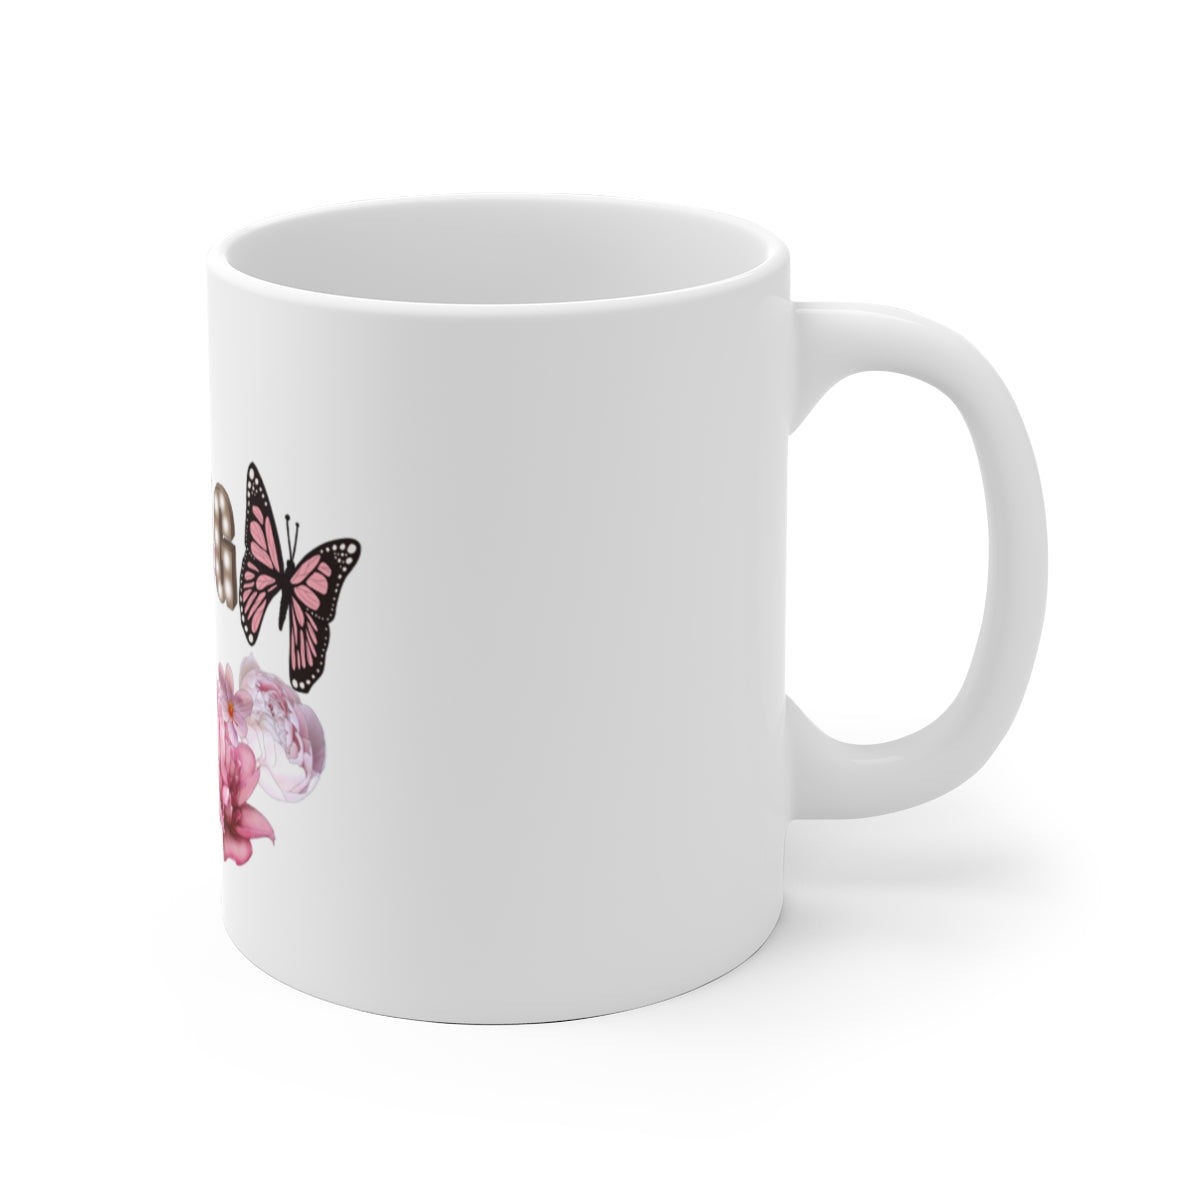 Spring and Pink Flowers White Ceramic Mug-Springtime-Butterfly Mug-Phrase Mug-Savage Mug-Gift for Her